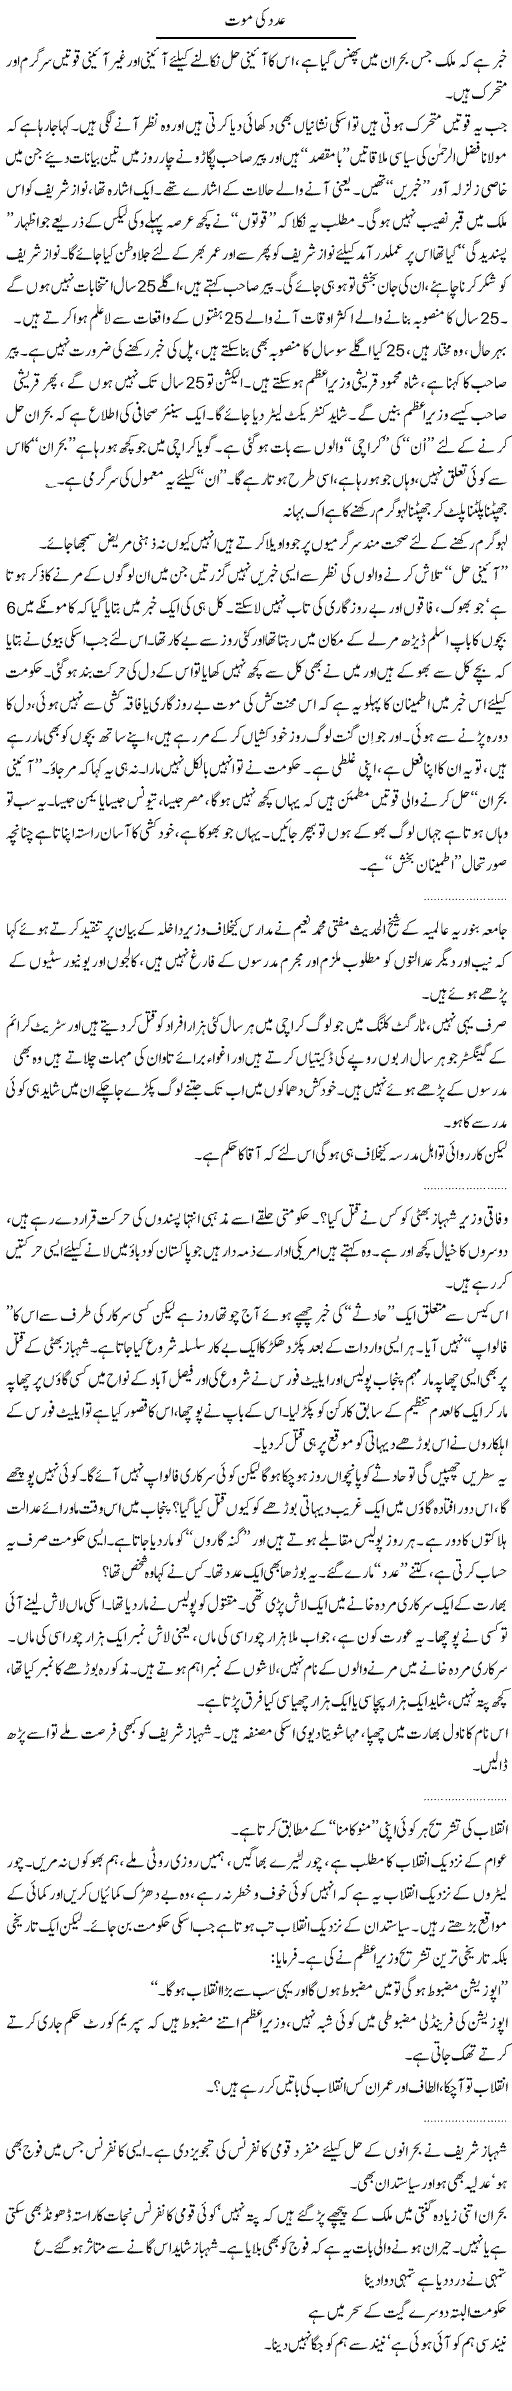 Change in Politics Express Column Abdullah Tariq 9 March 2011